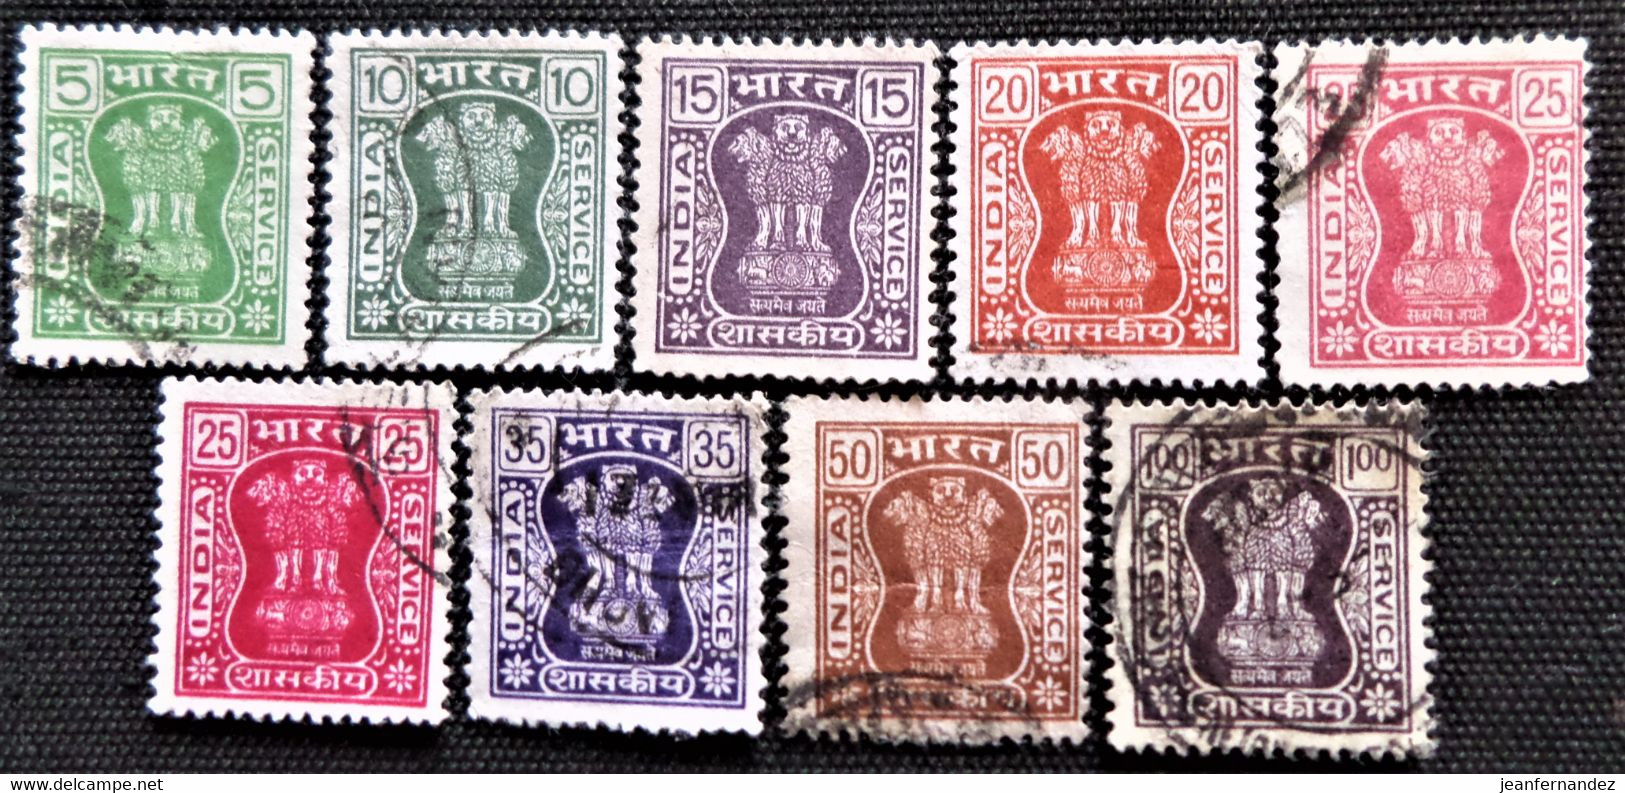 Timbres De Service De L'Inde 1976 -1980 Capital Of Asoka Pillar  Stampworld N°  192 à 196A_198 à 200 - Official Stamps